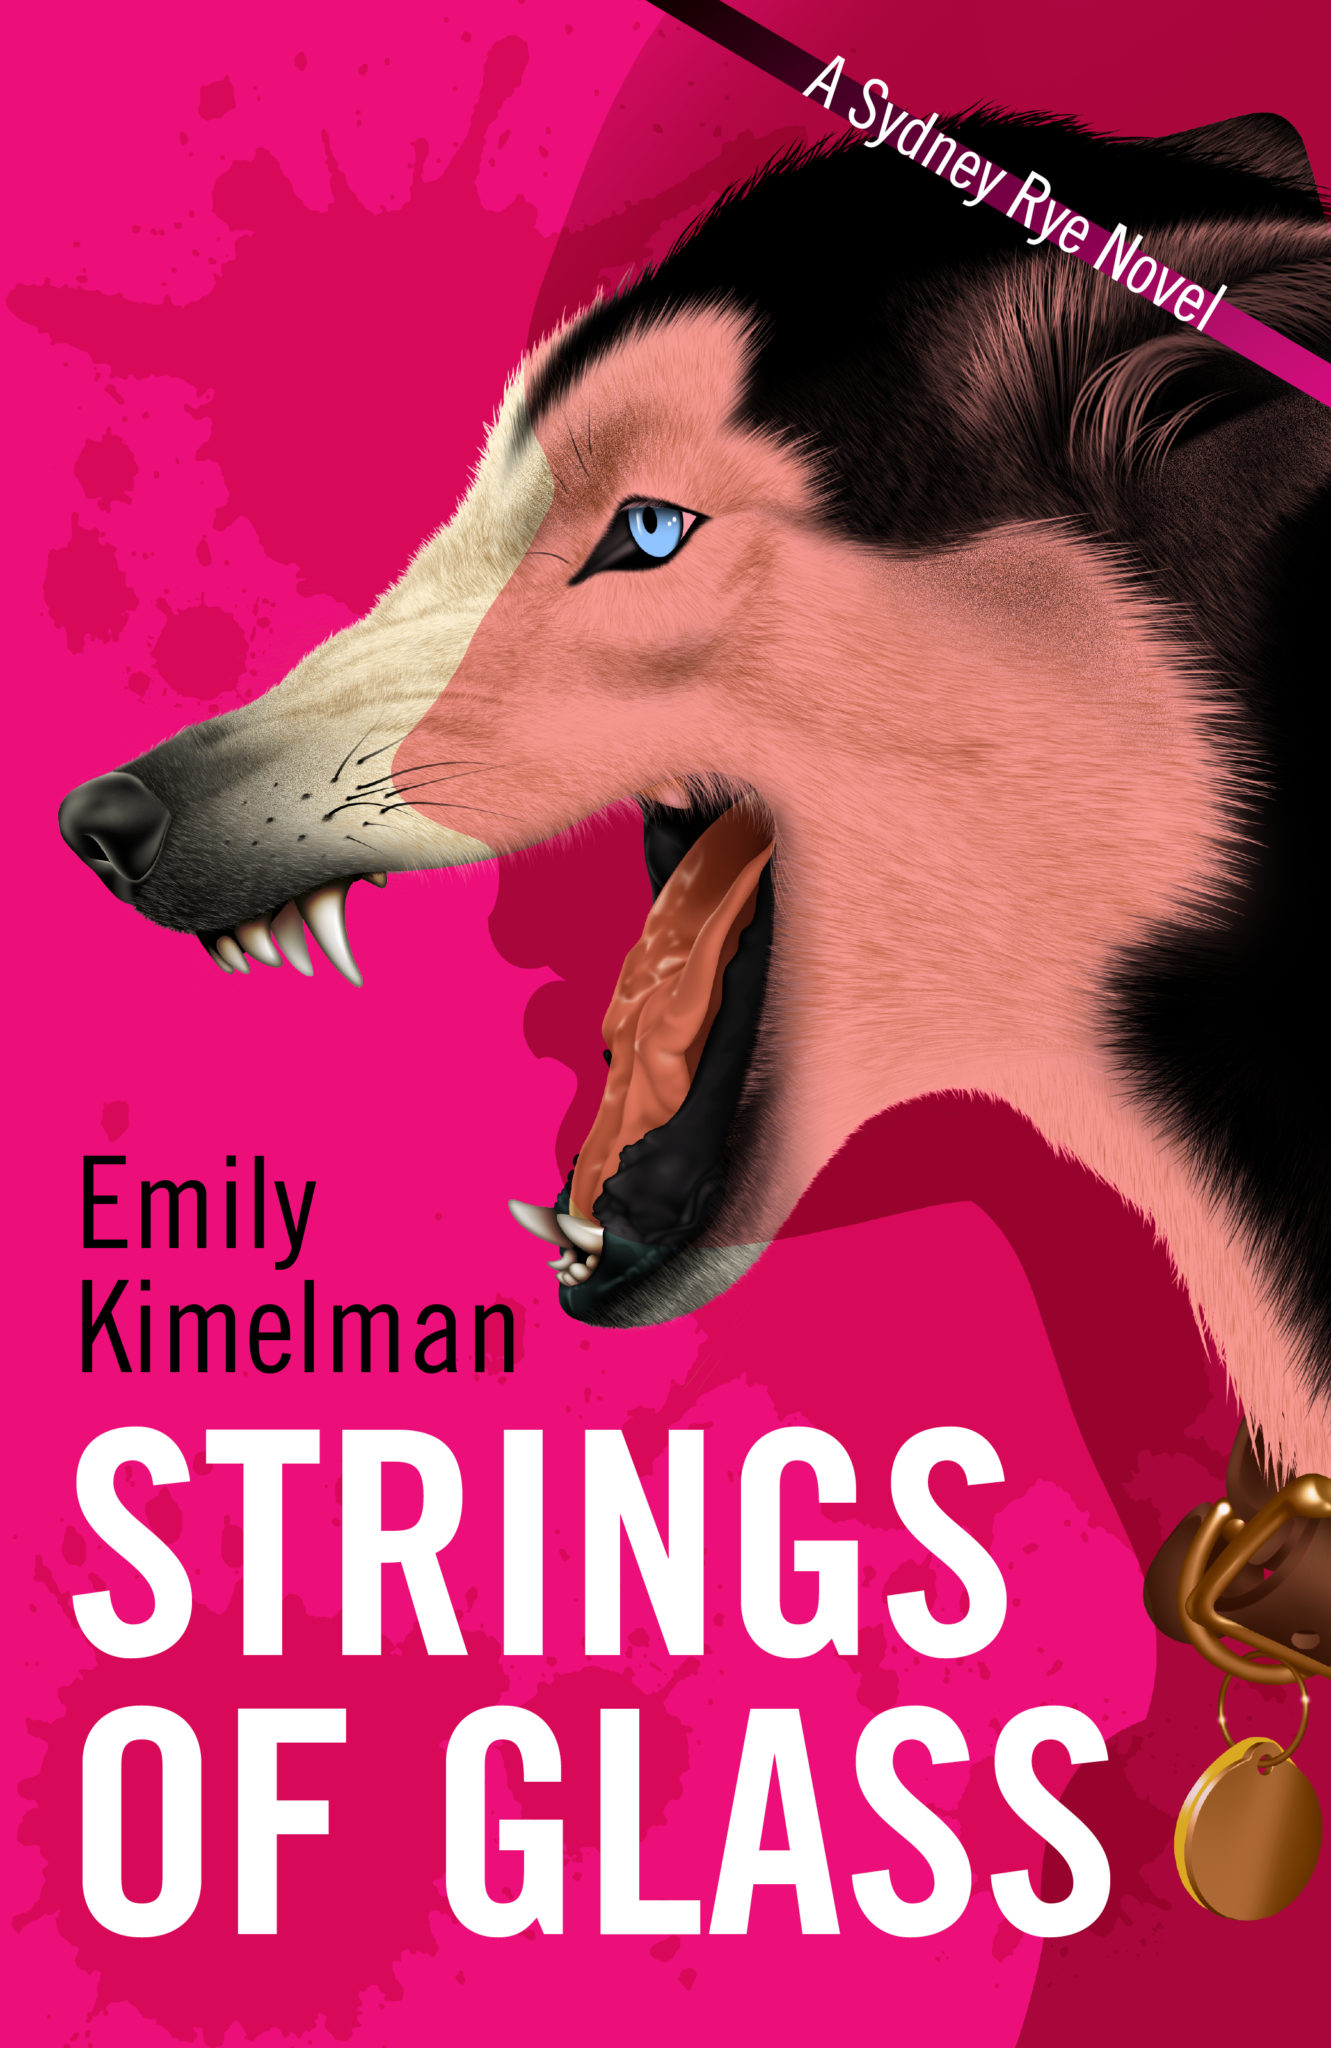 FREE: Strings of Glass by Emily Kimelman